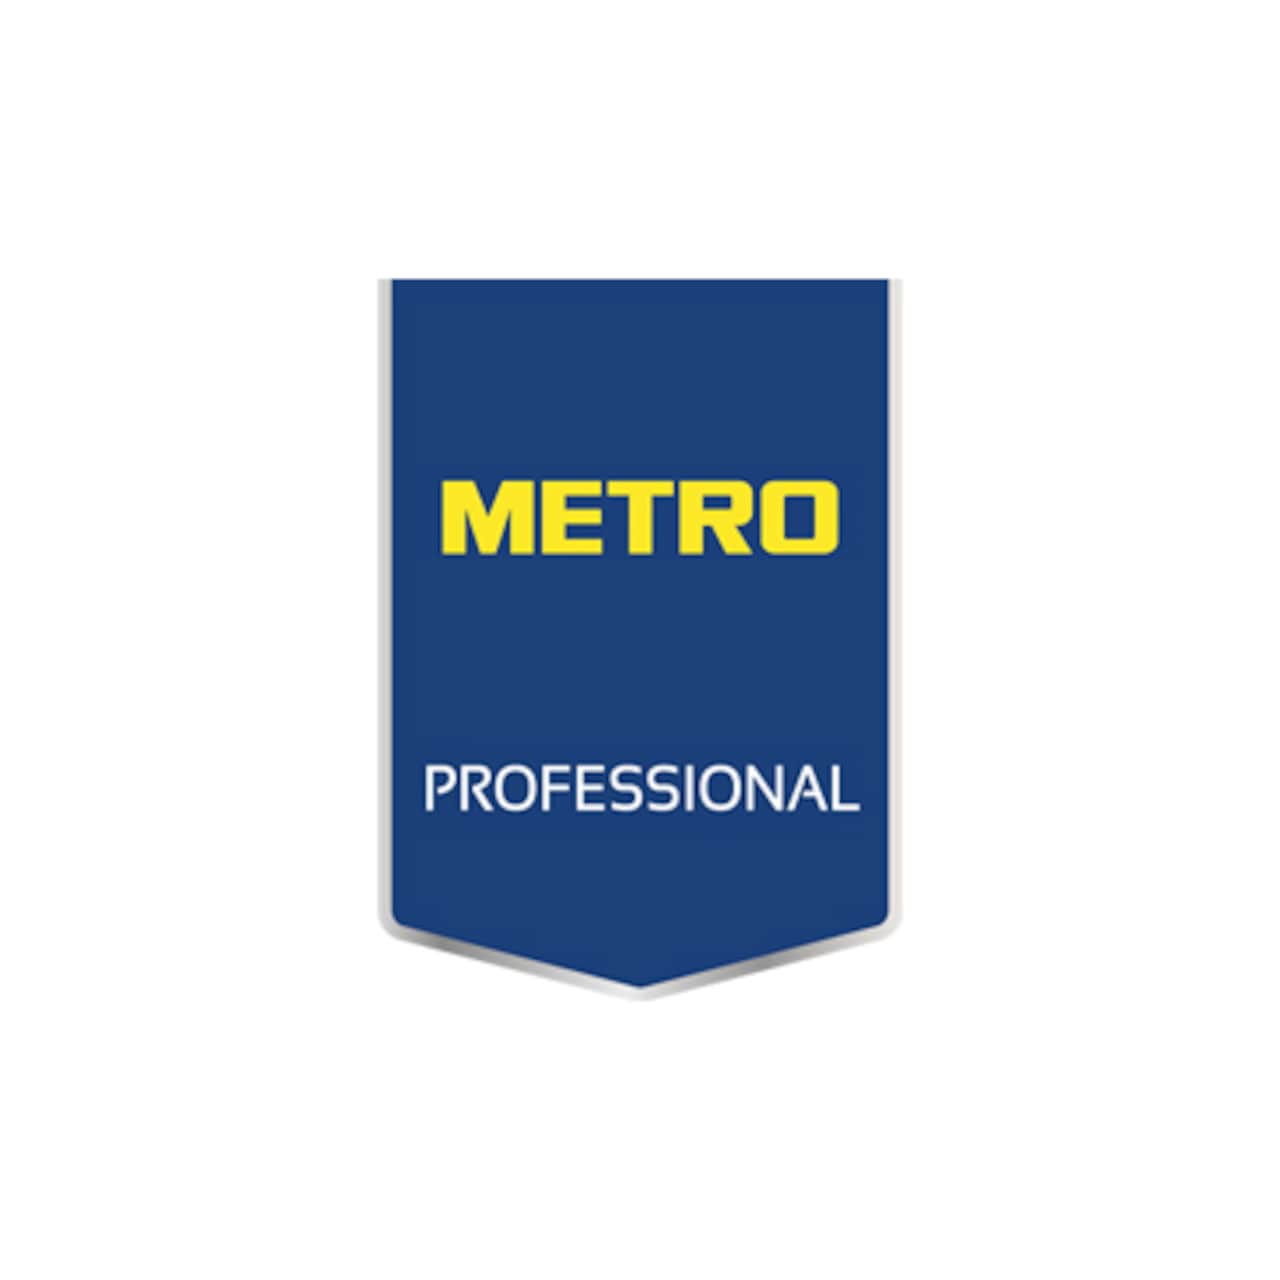 metro professional logo